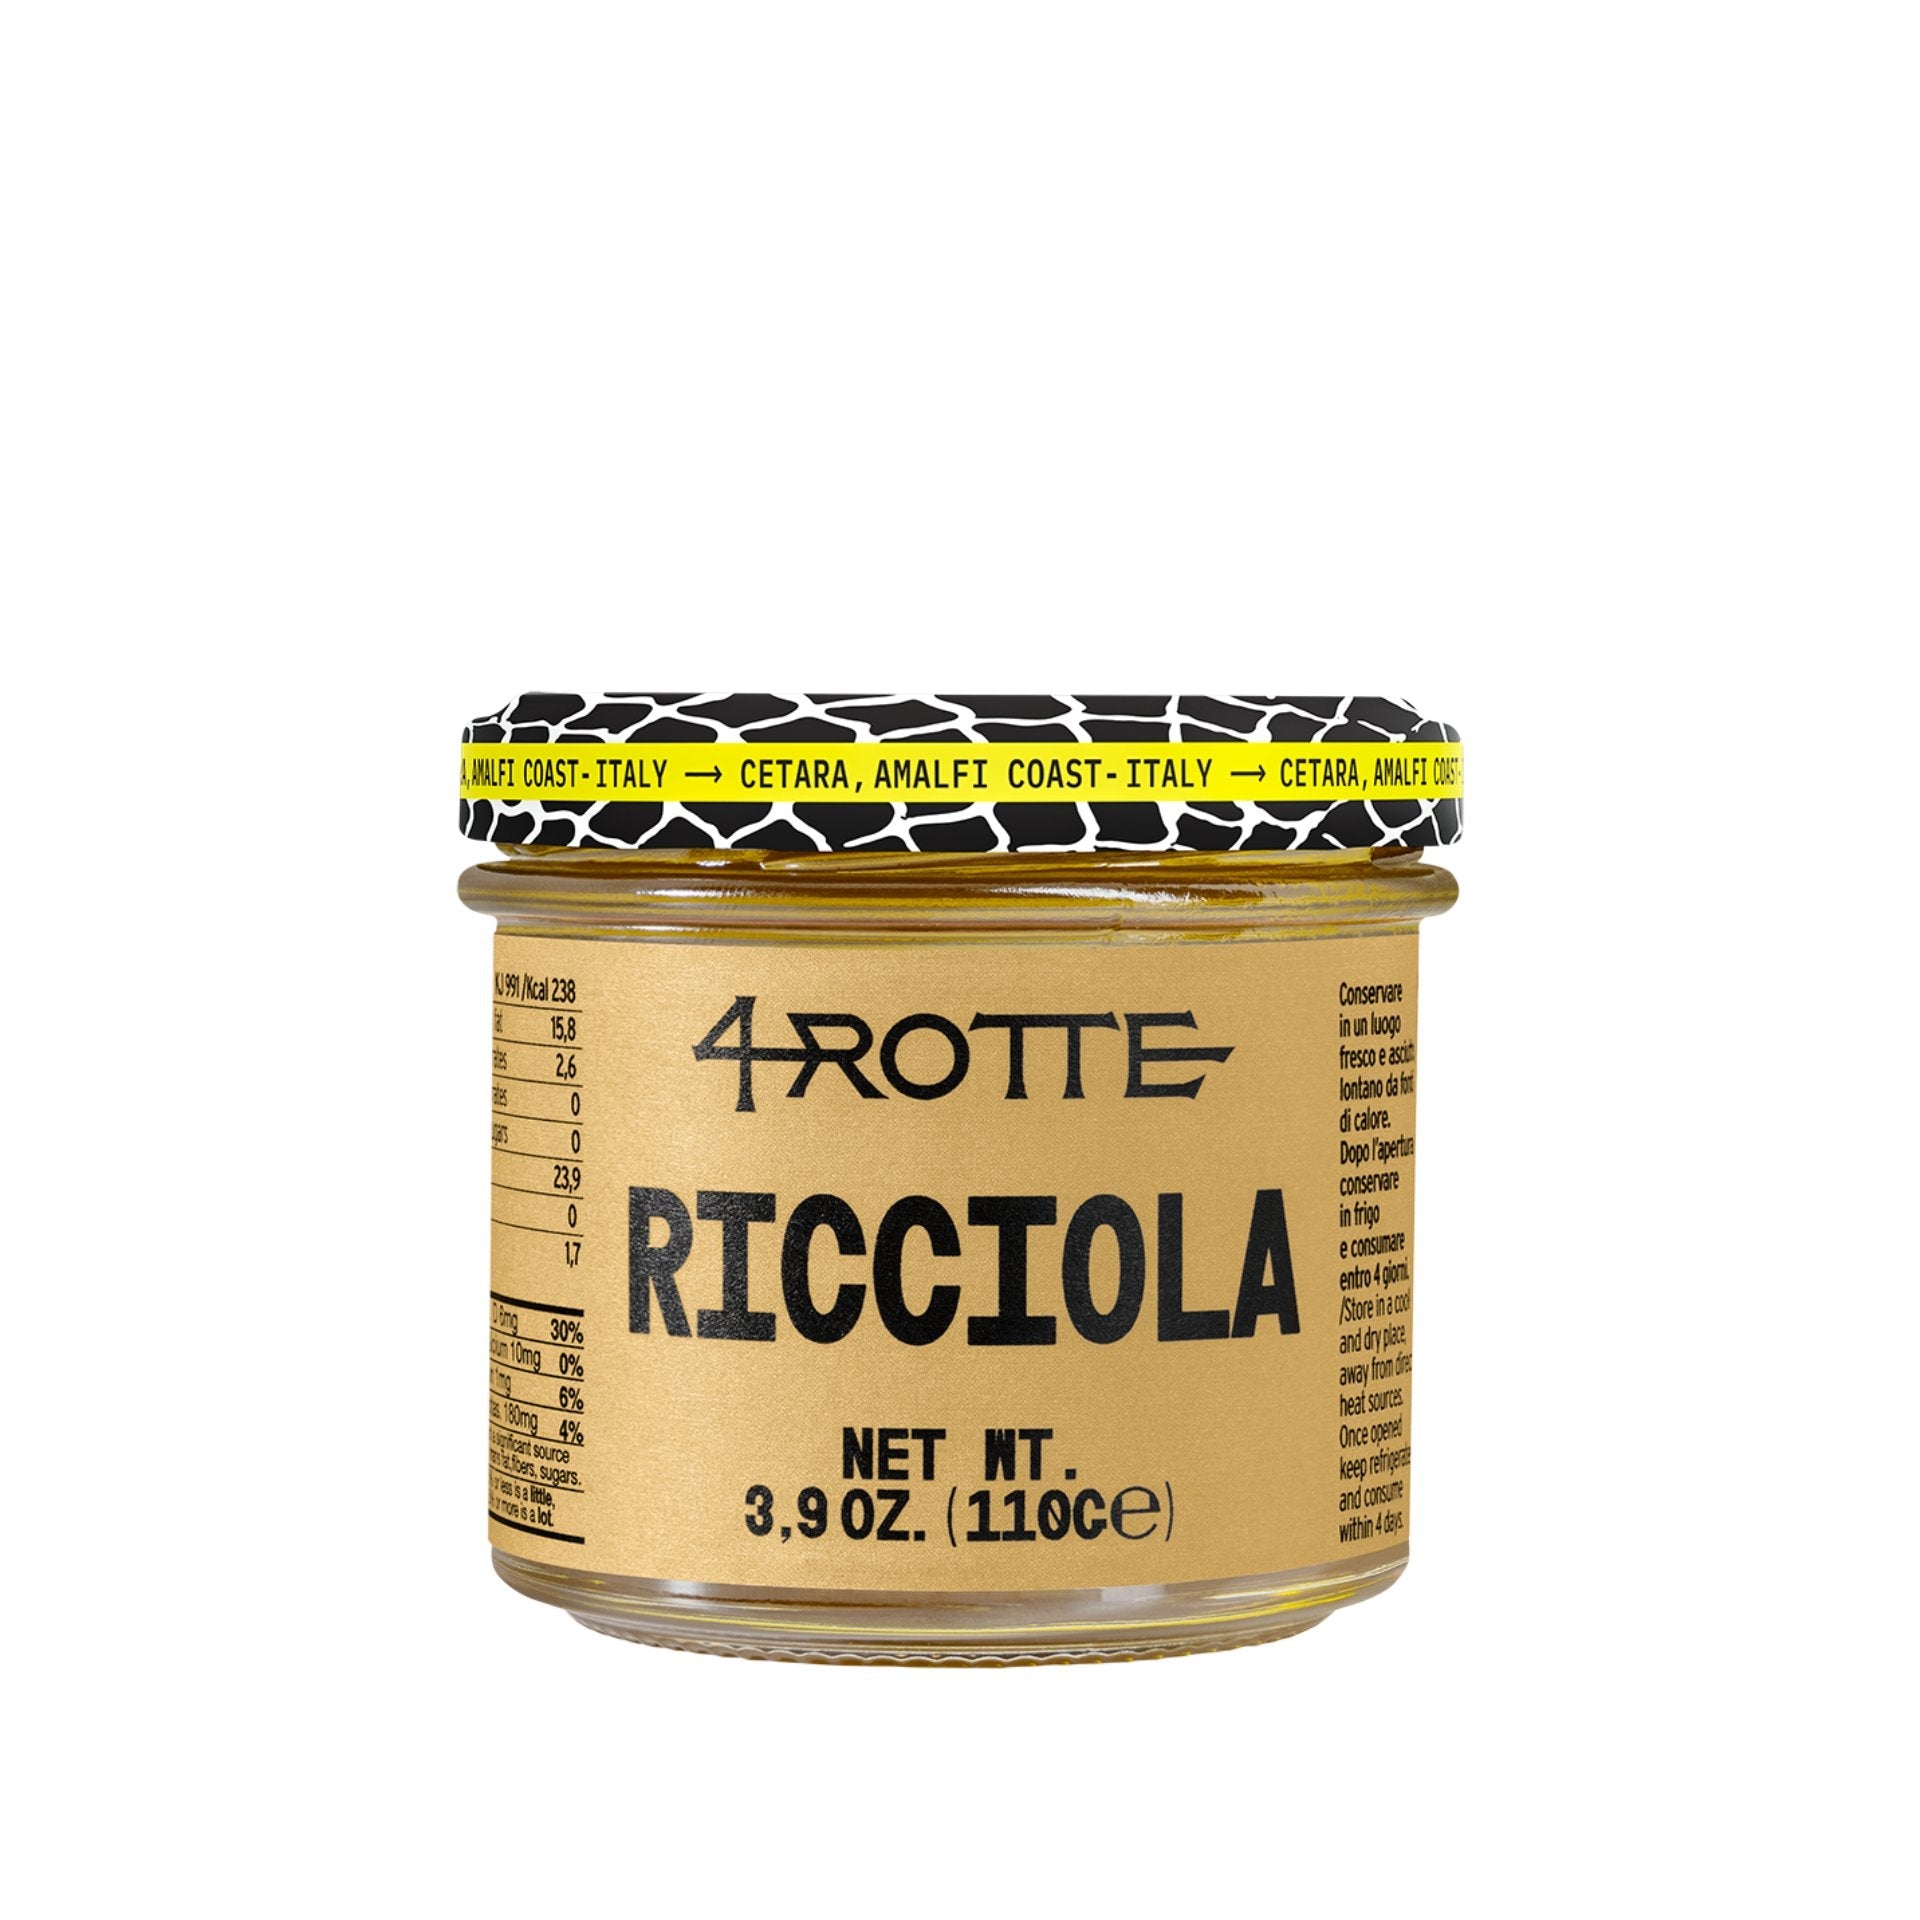 Armatore Ricciola Amberjack Fillets in Olive Oil 110g Feast Italy